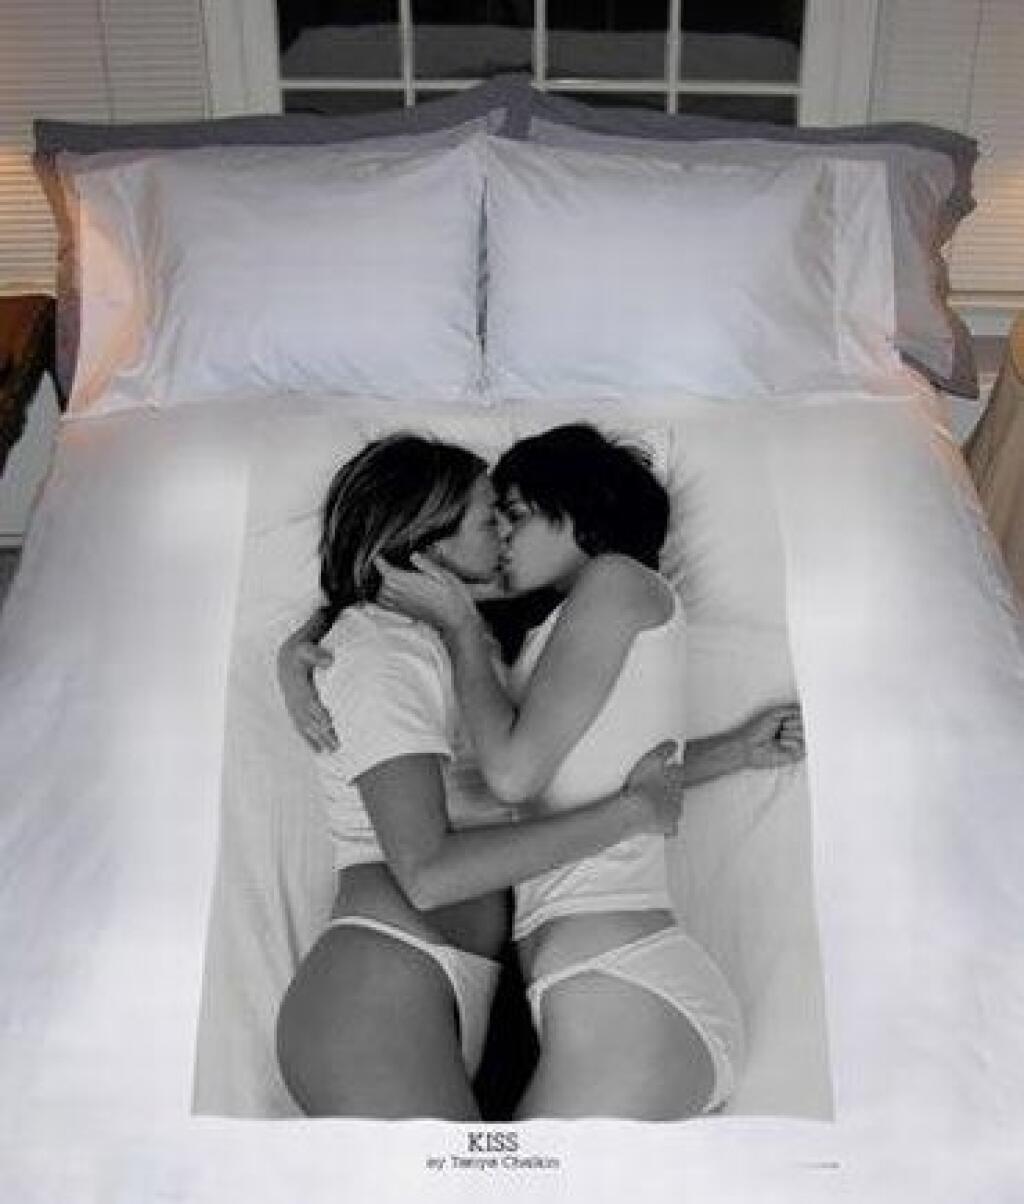 лесби целуются в постели фото 78